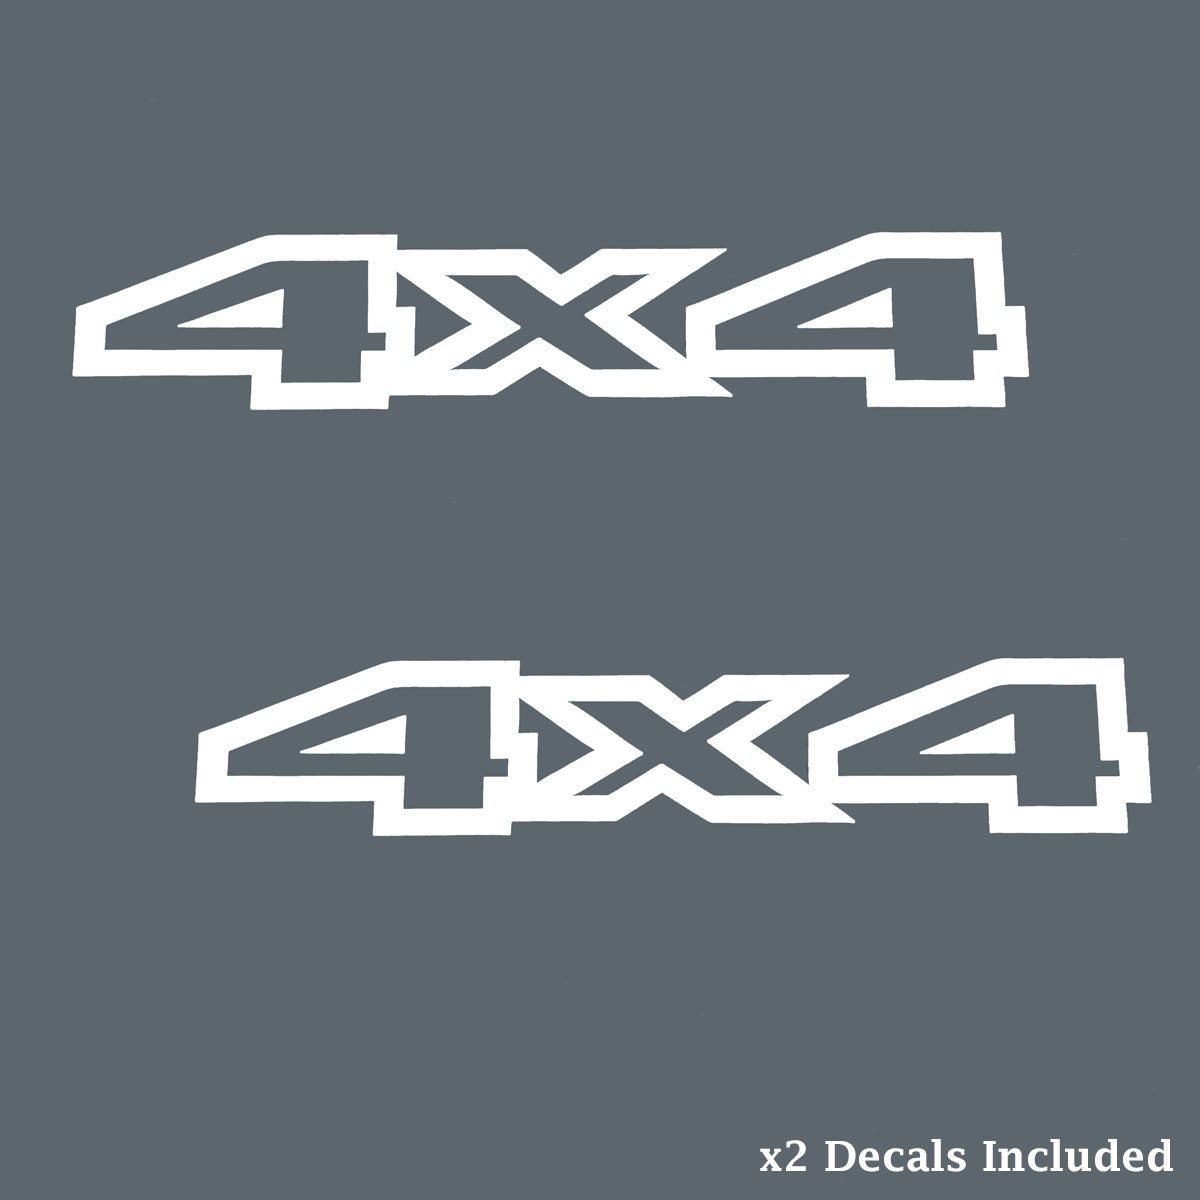 4x4 Decal (Pair) - Black, White, Gold, Silver